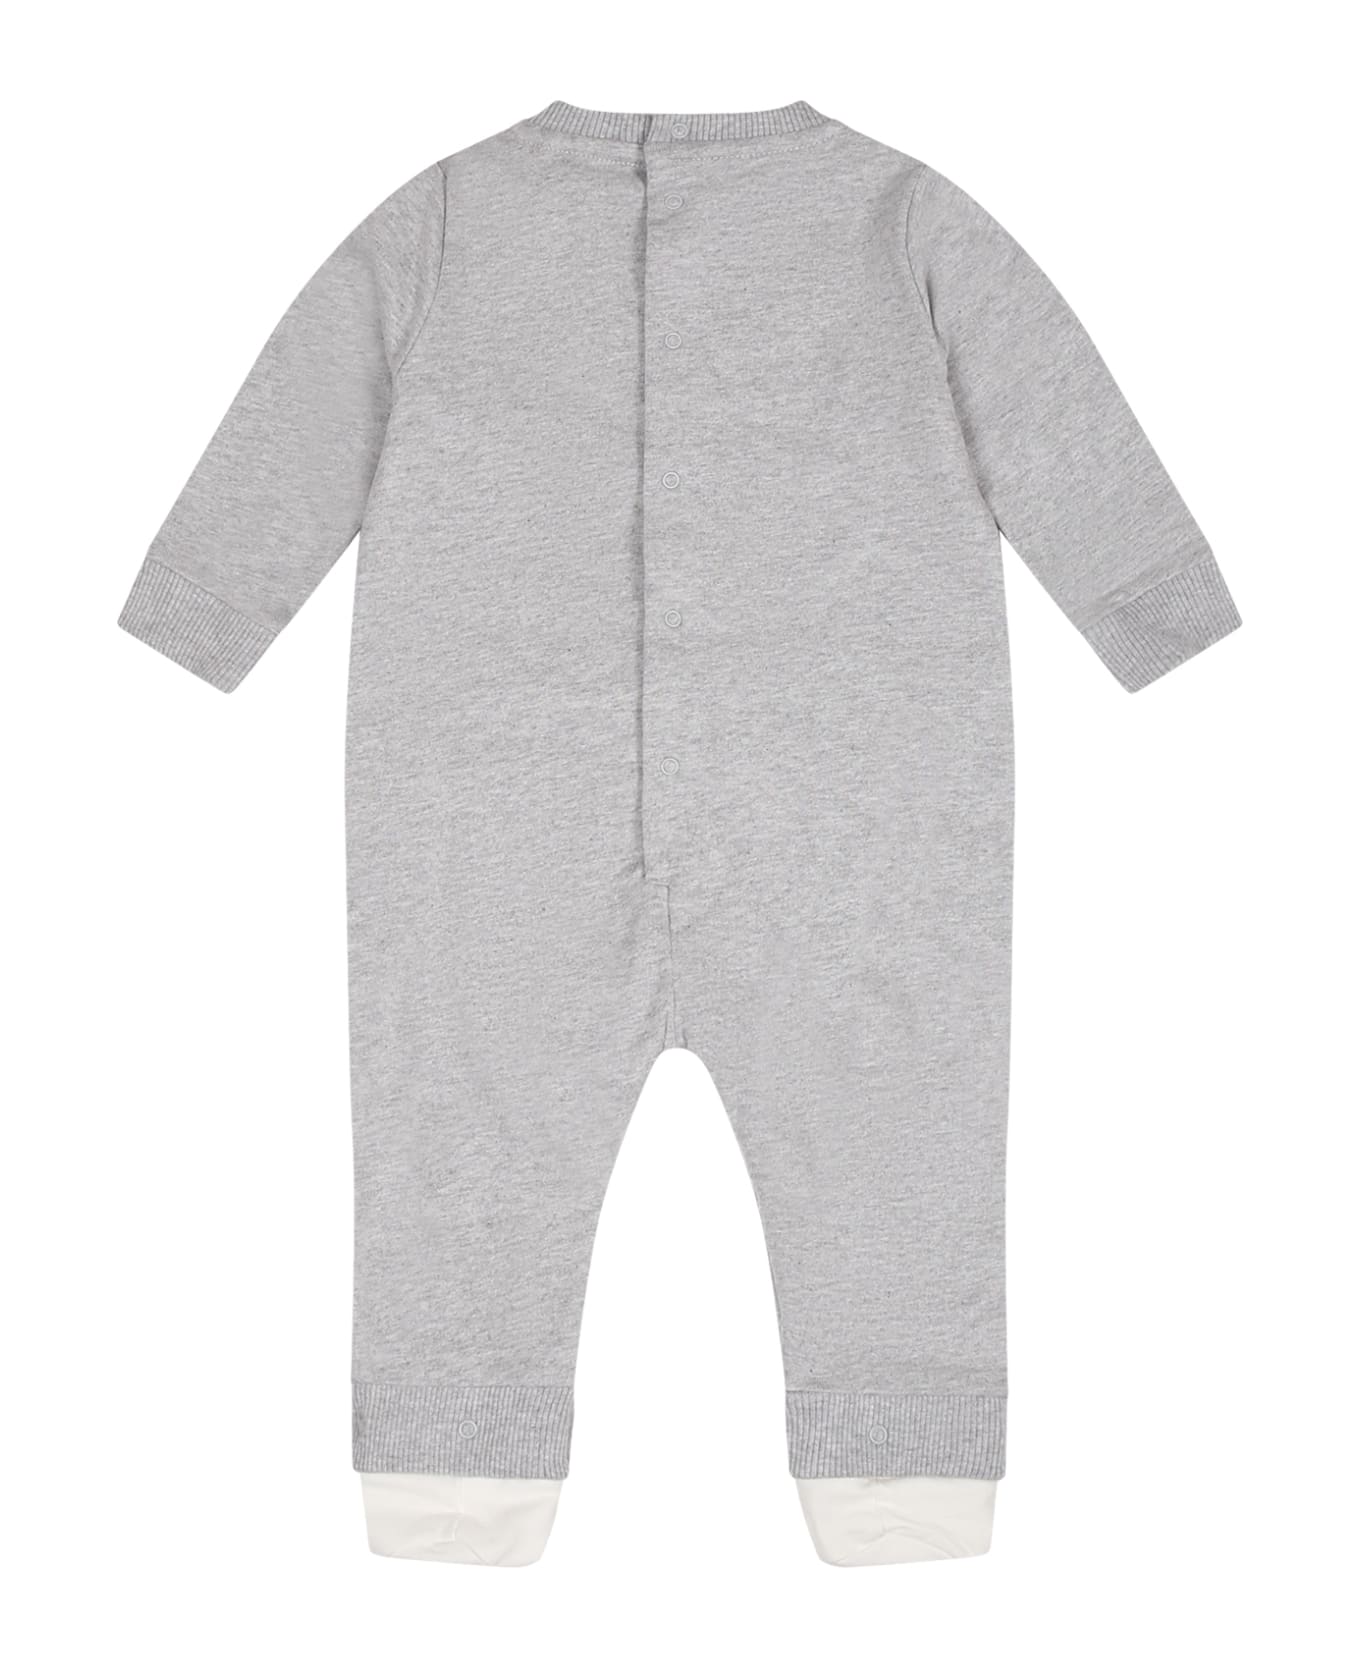 Moschino Grey Babygrow For Baby Kids With Teddy Bear - Grey